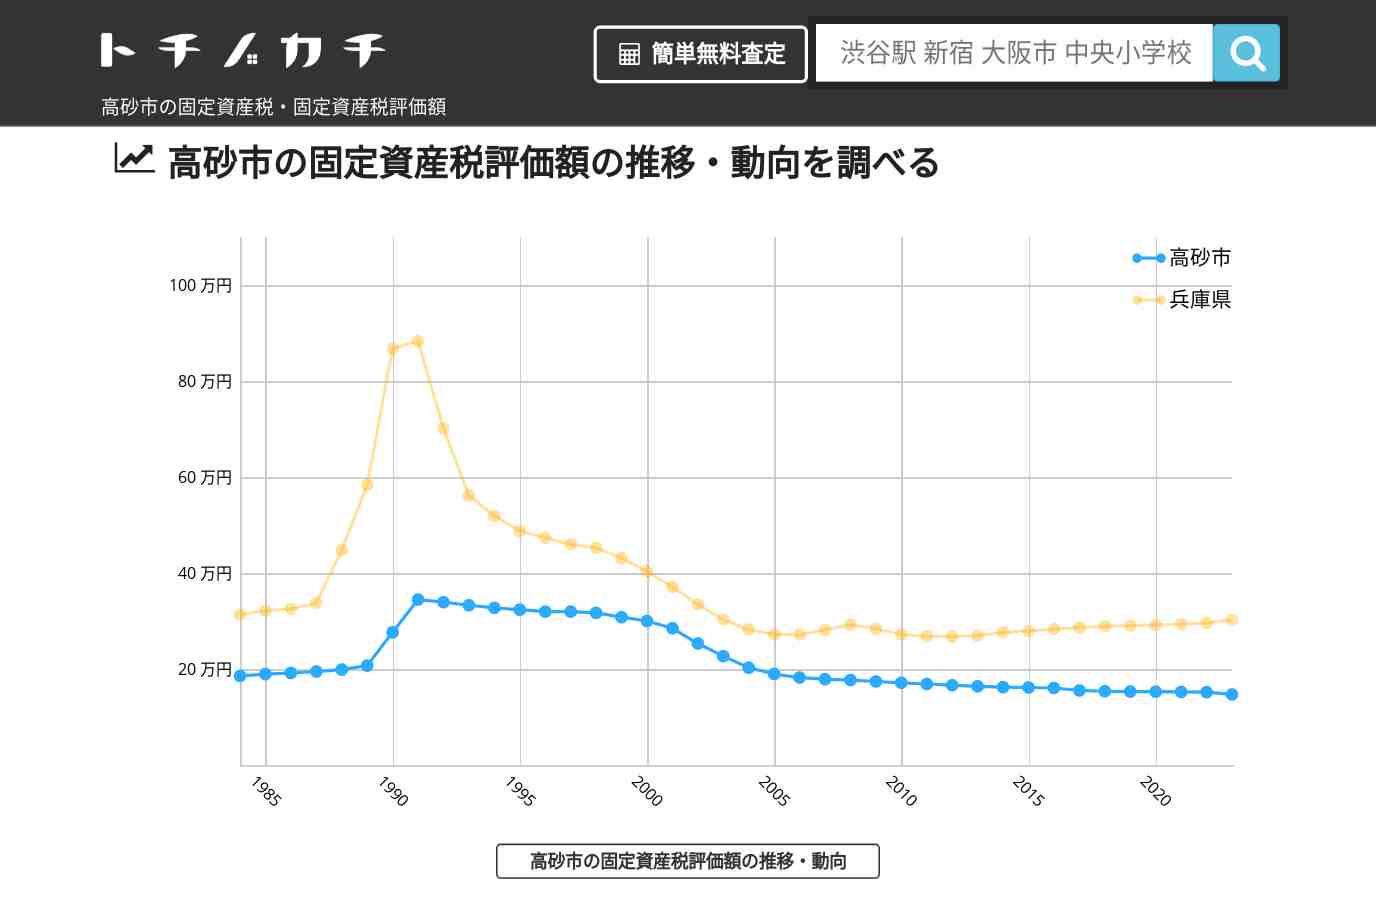 中筋小学校(兵庫県 高砂市)周辺の固定資産税・固定資産税評価額 | トチノカチ